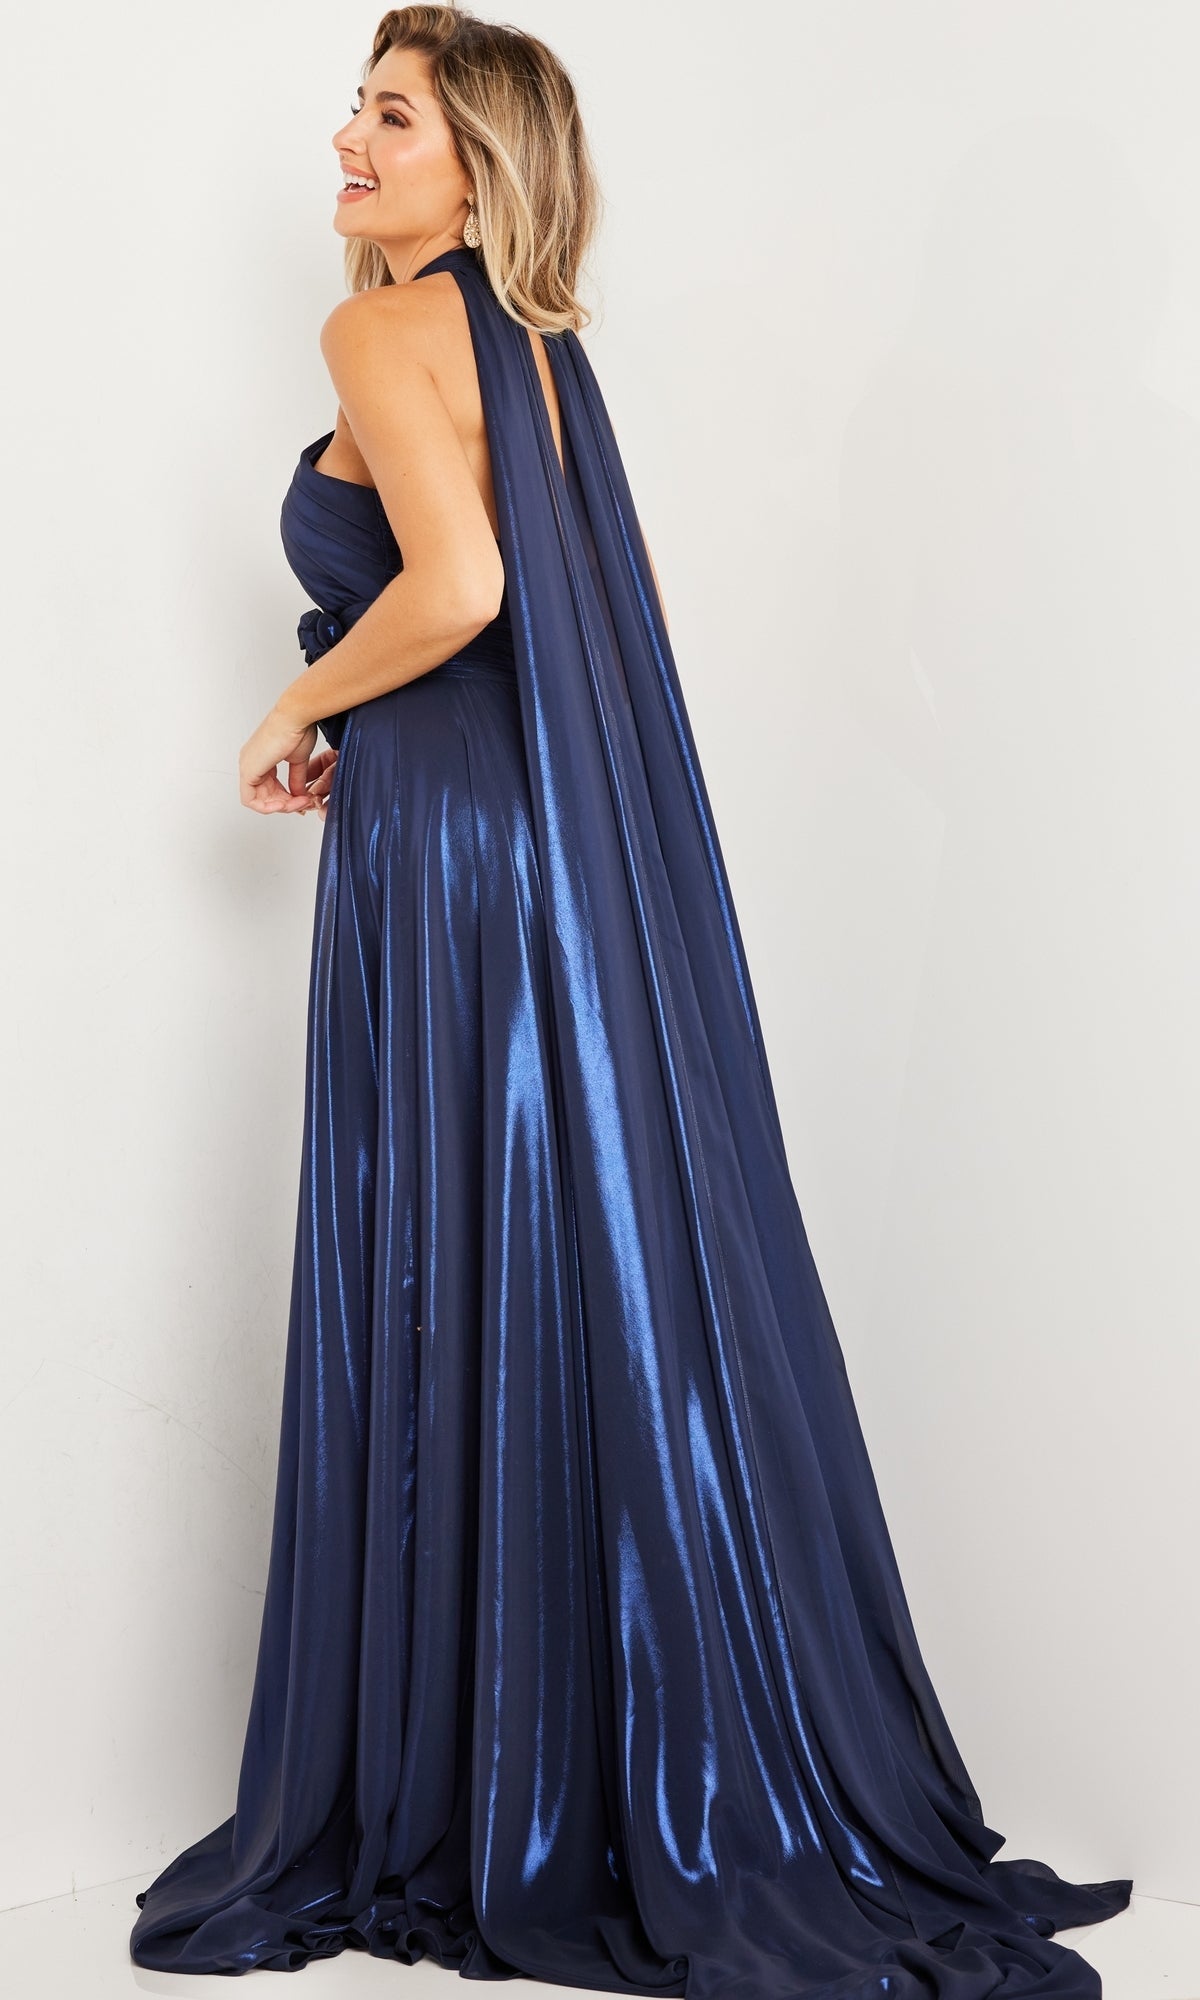  Formal Long Dress 37163 by Jovani